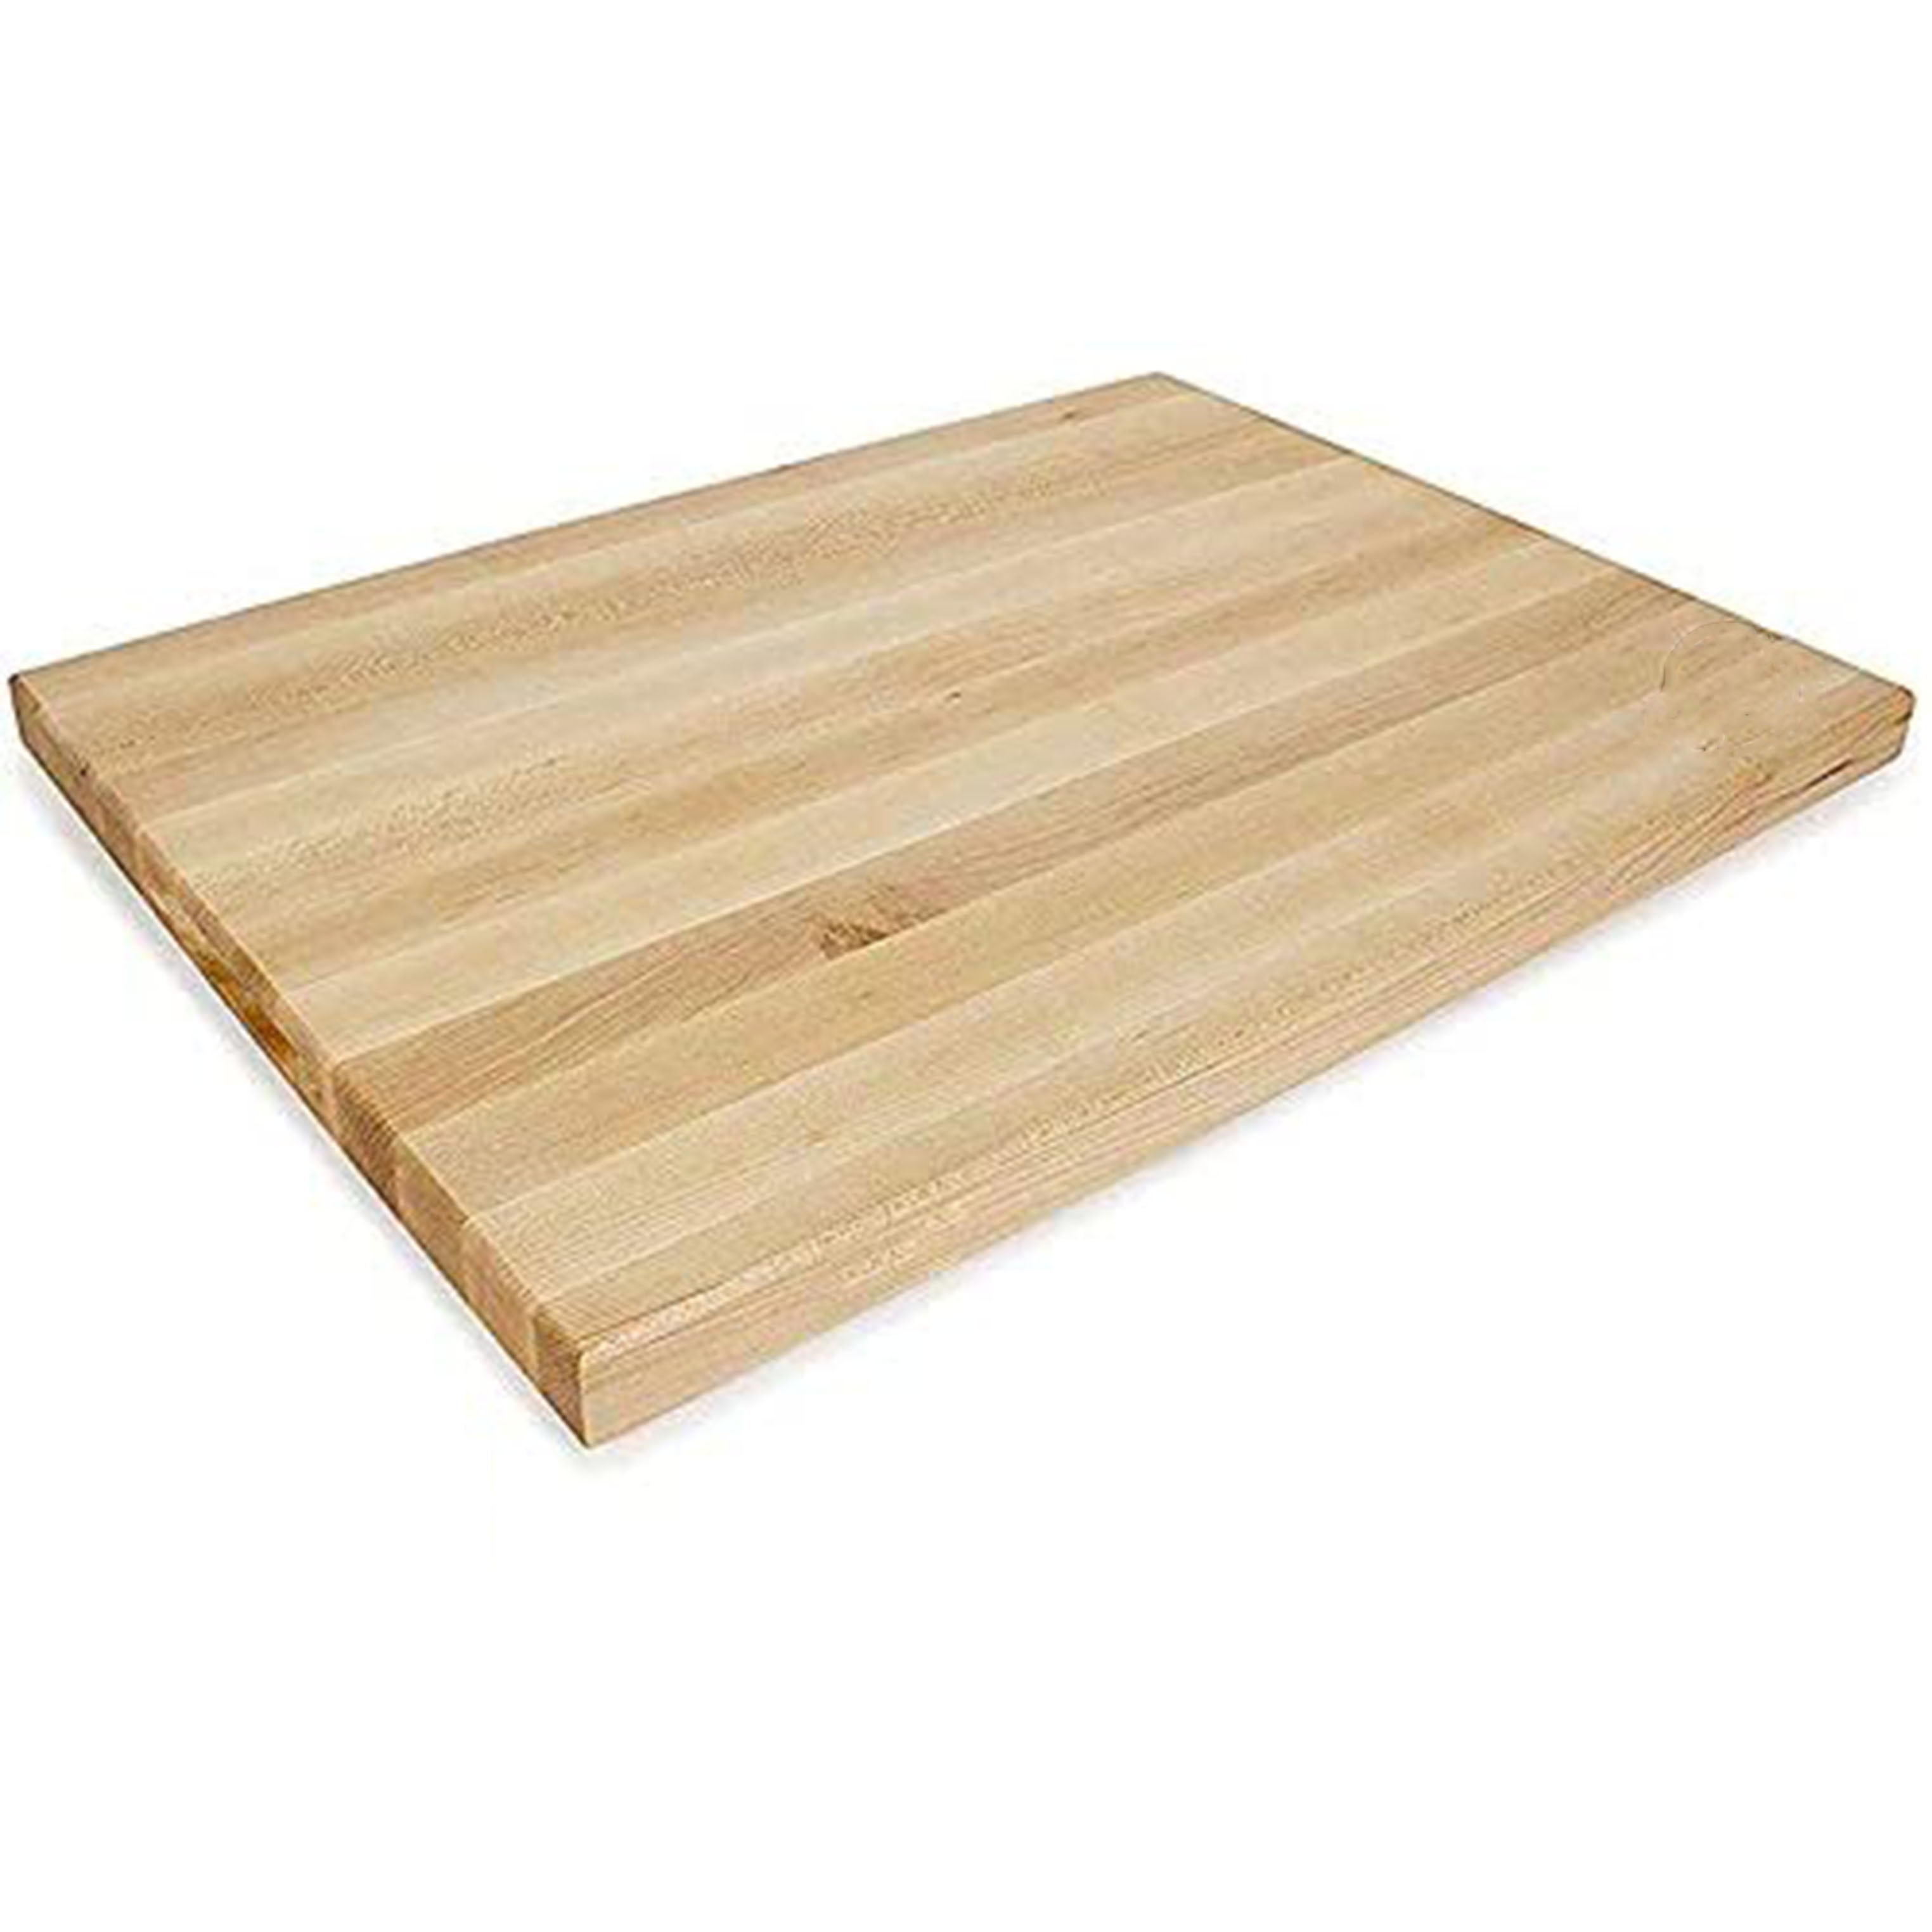 20" x 15" x 1 3/4" Wood Commercial Restaurant Solid Cutting Board Butcher Block